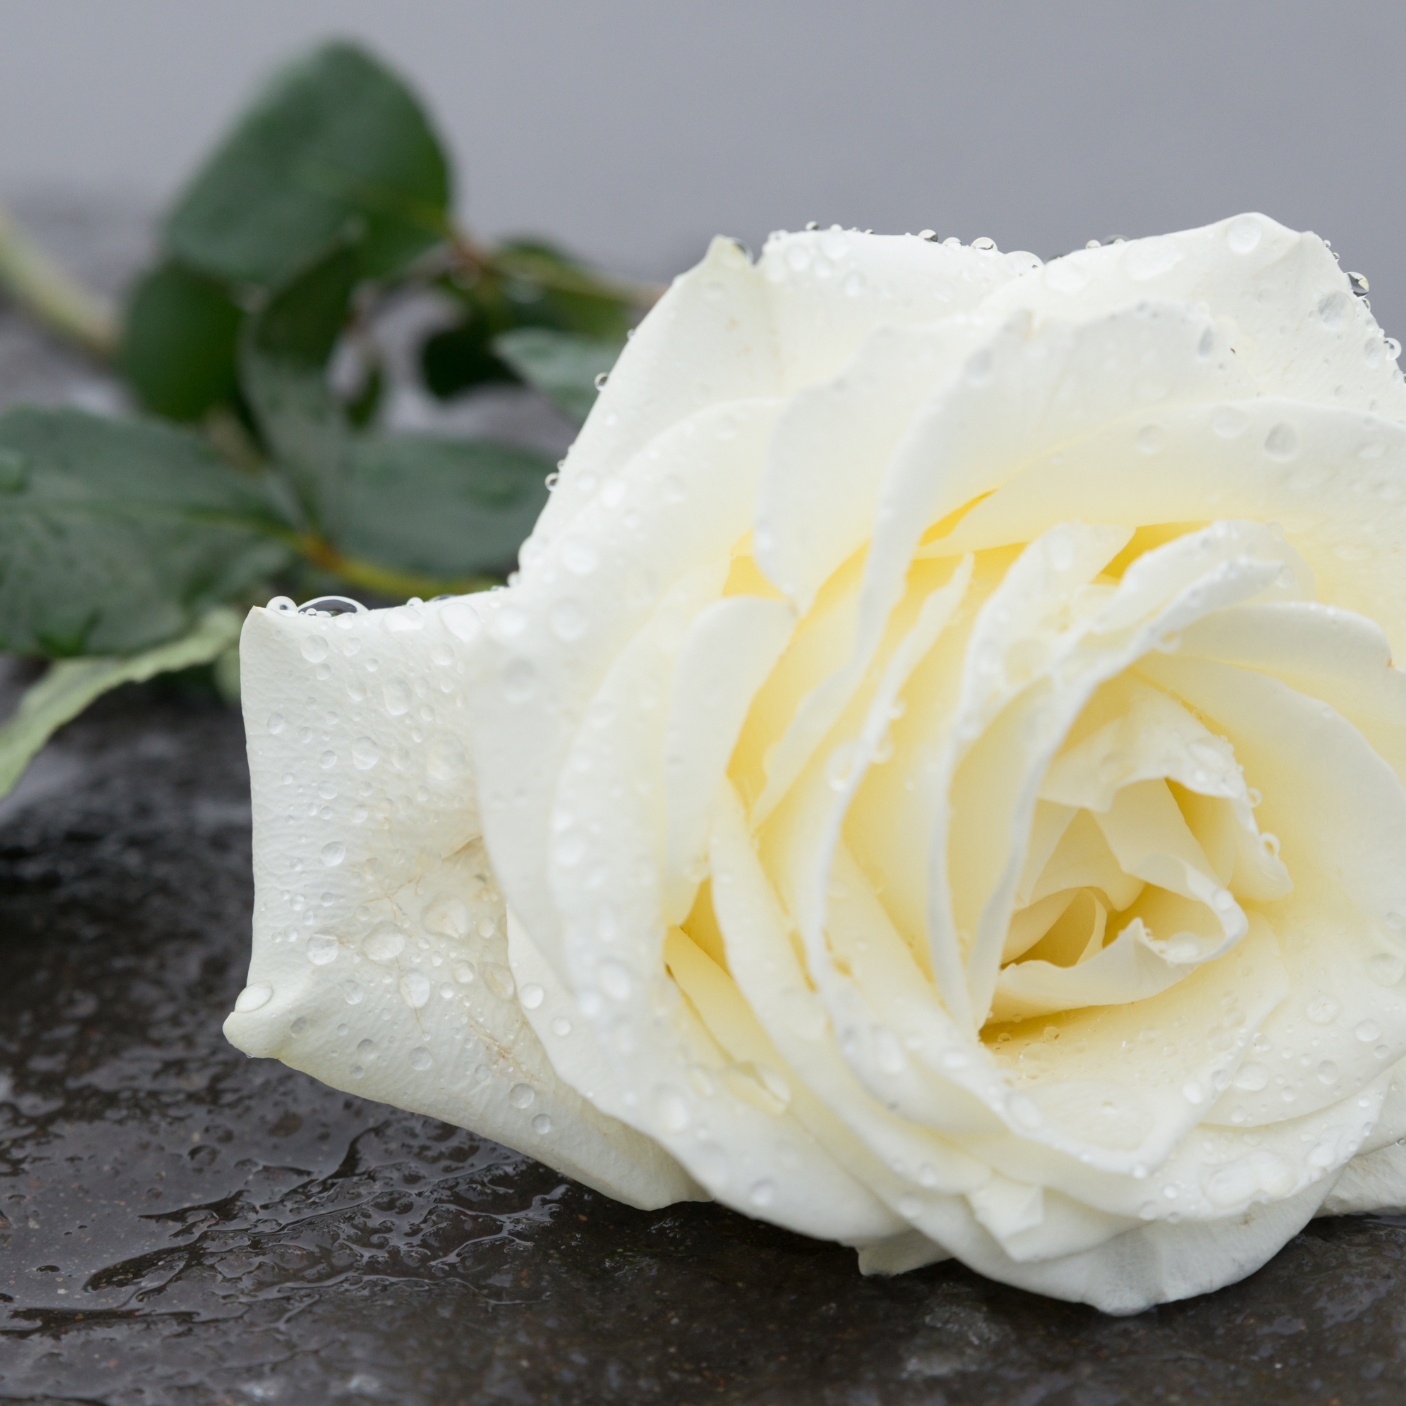 Image of White Rose